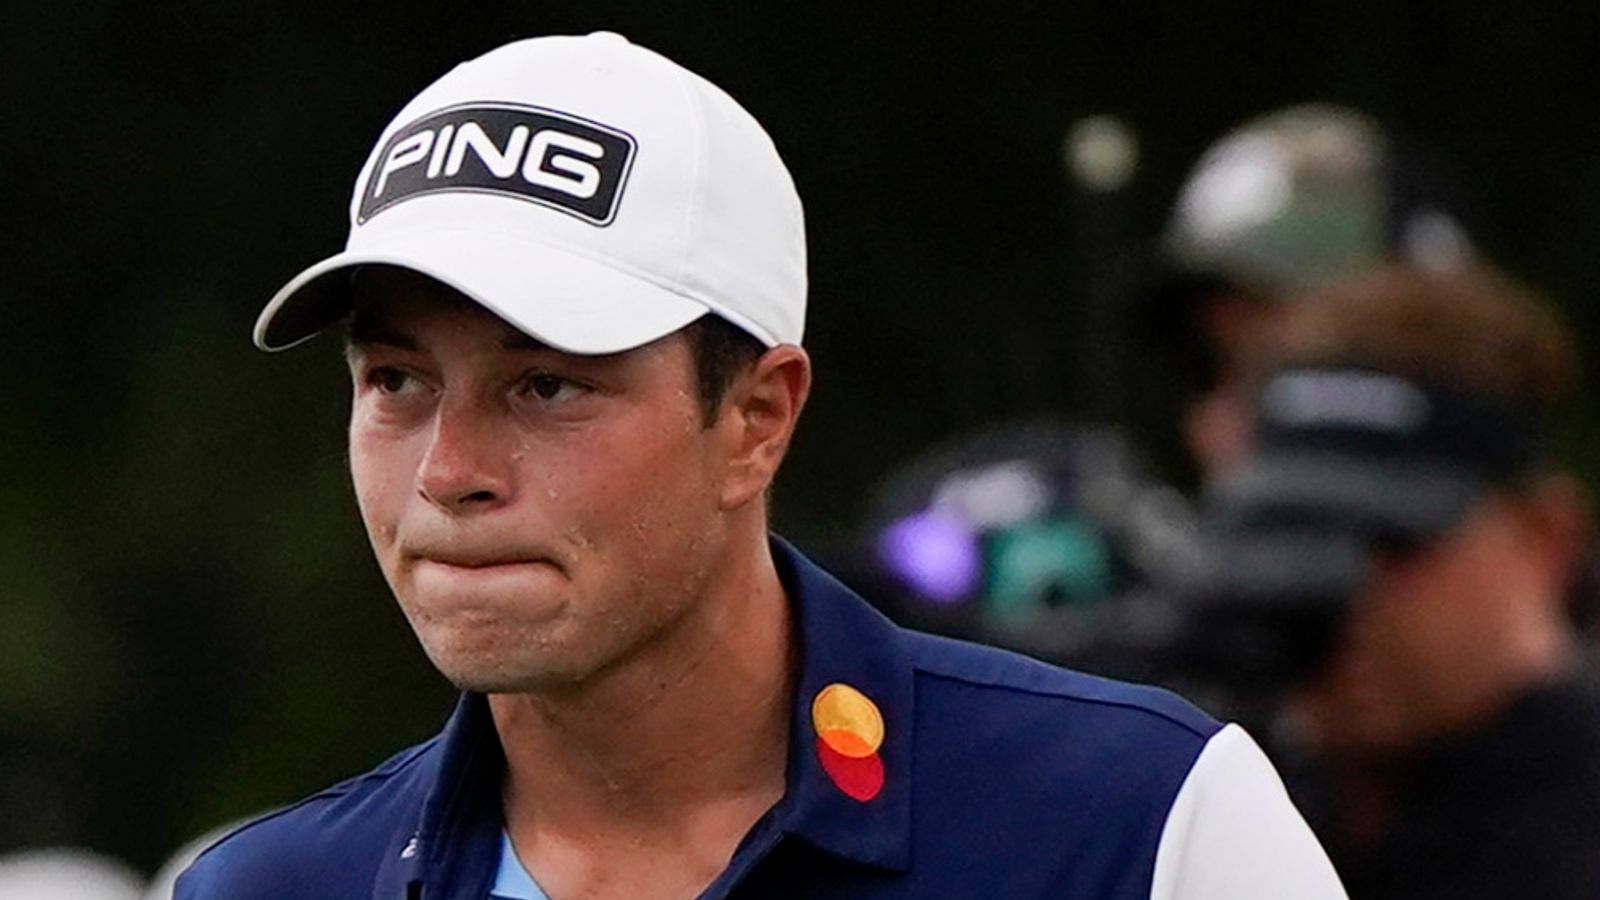 Viktor Hovland meredam rumor LIV setelah Jon Rahm pindah tapi merobek ‘arogansi’ pimpinan PGA Tour |  Berita Golf